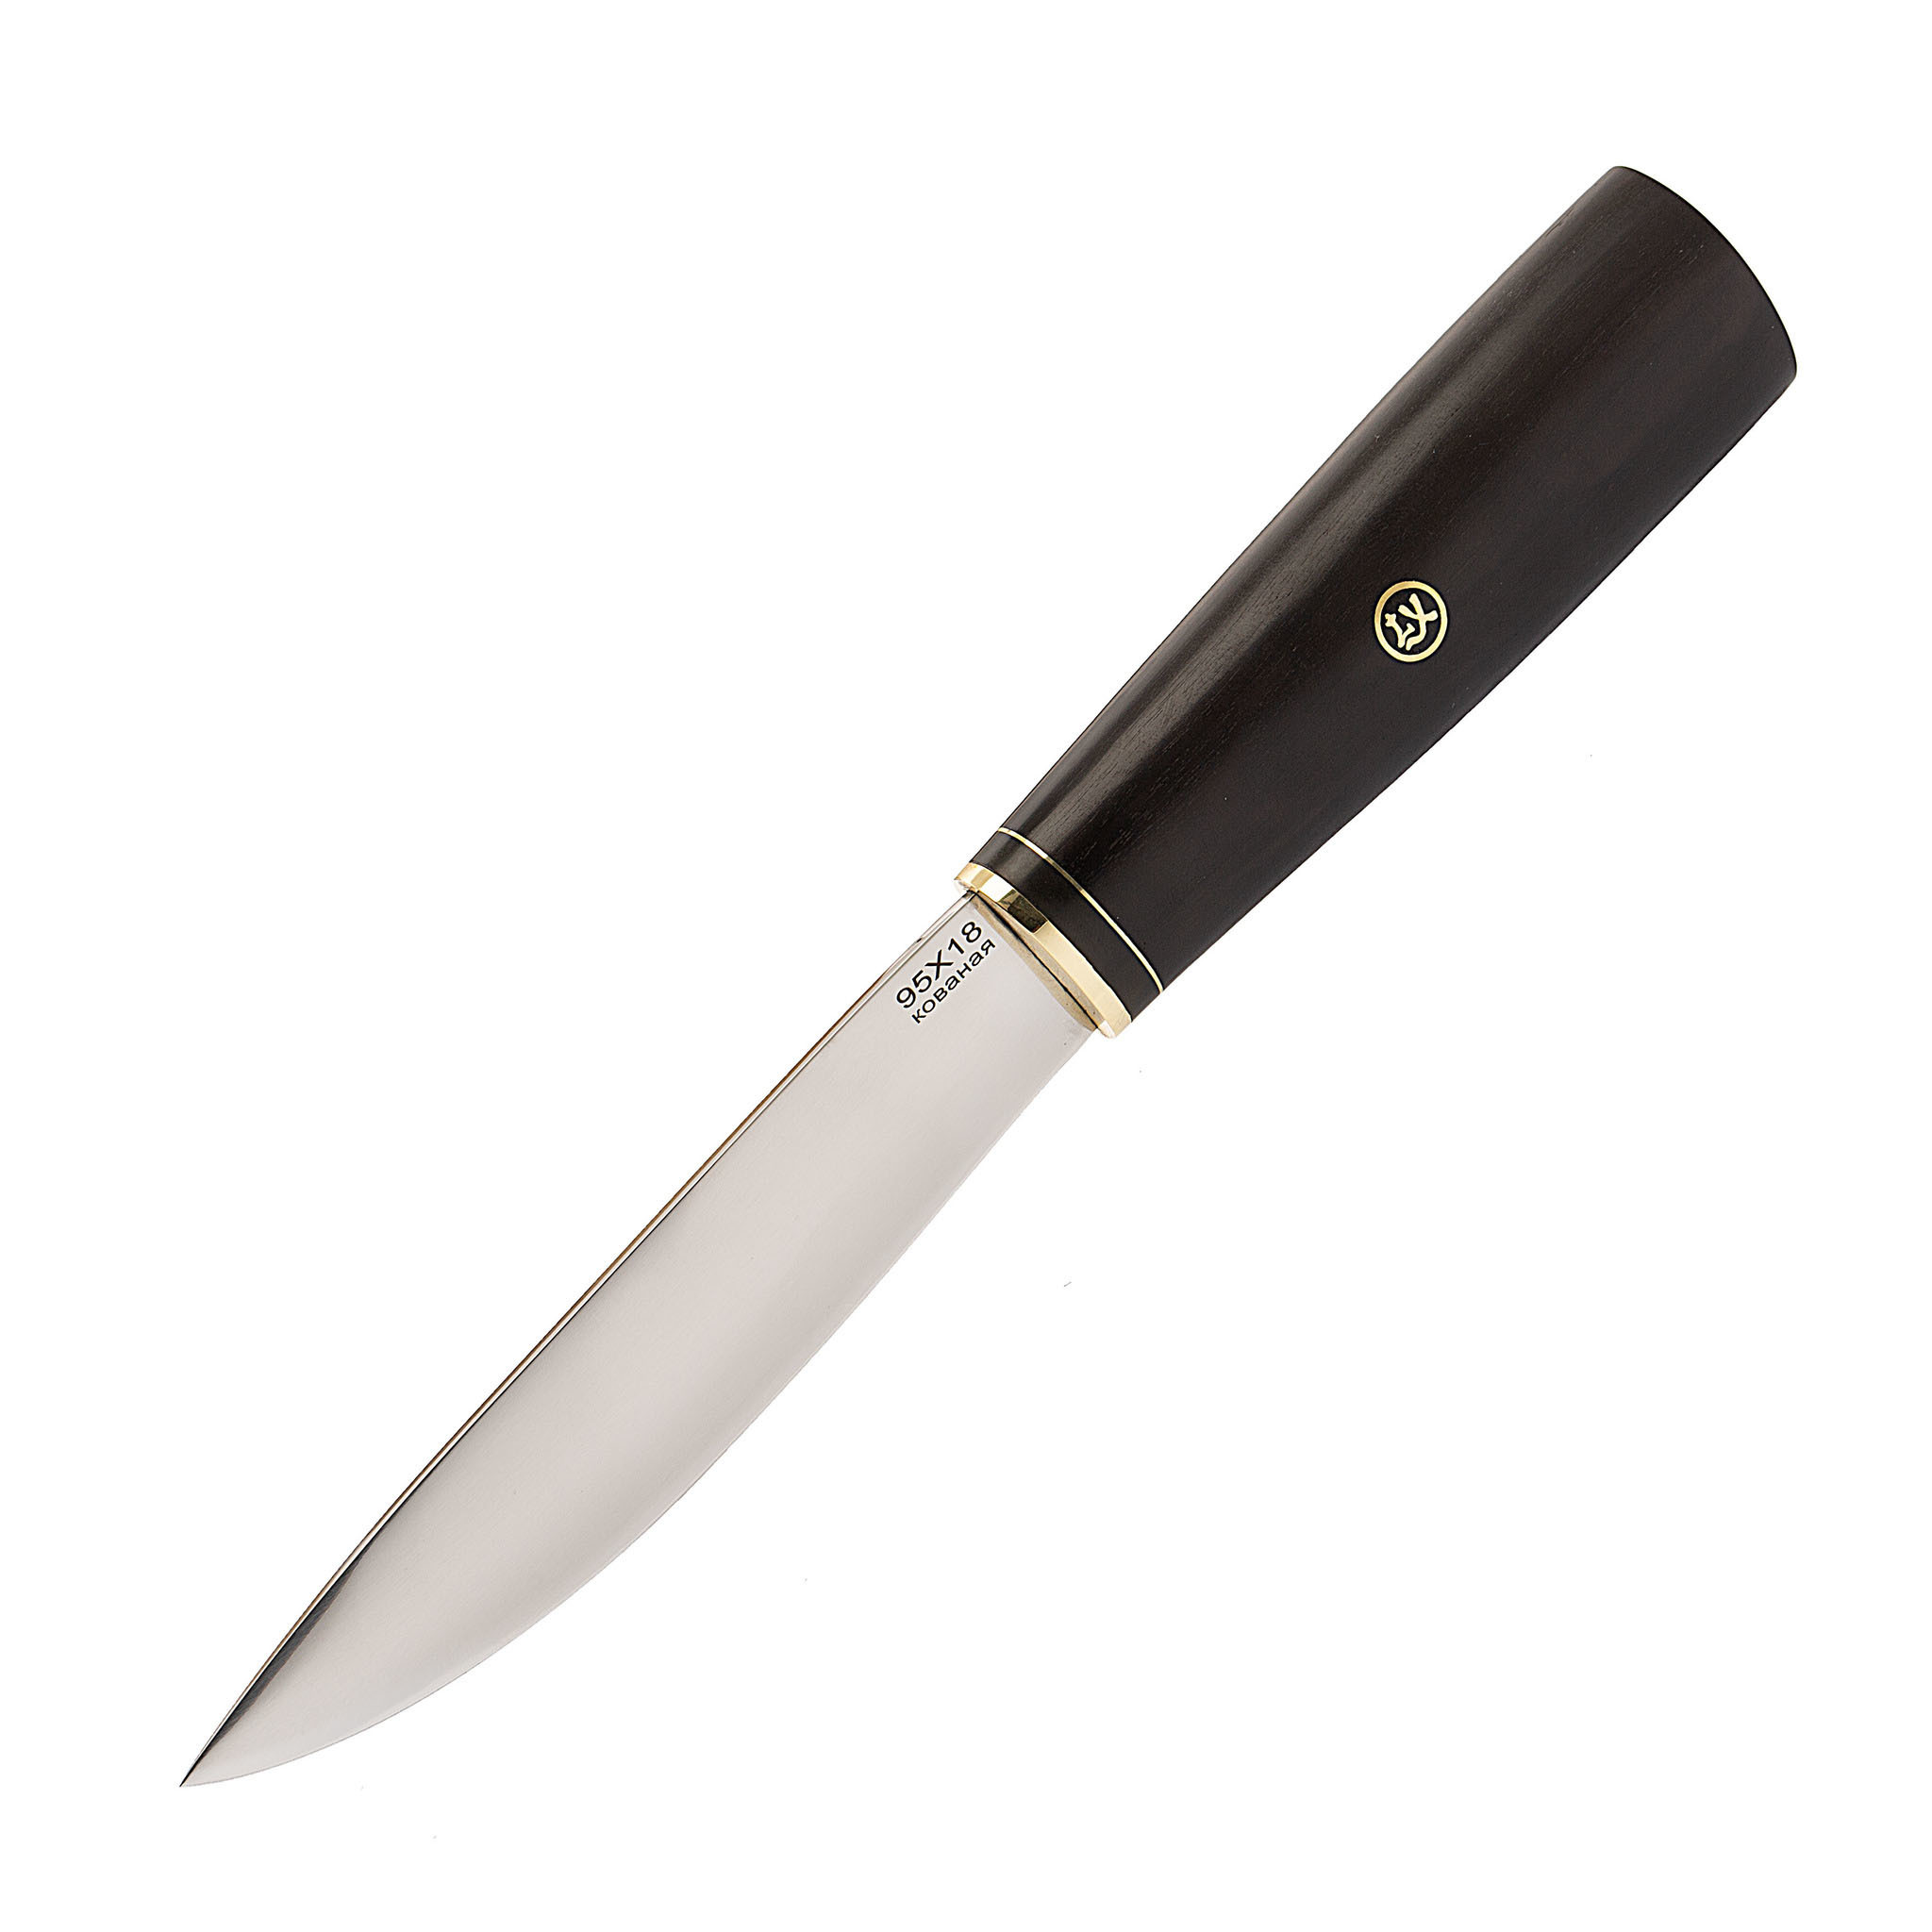 Нож Якутский, сталь 95х18, граб нож разделочный аир жулан сталь 95х18 рукоять граб